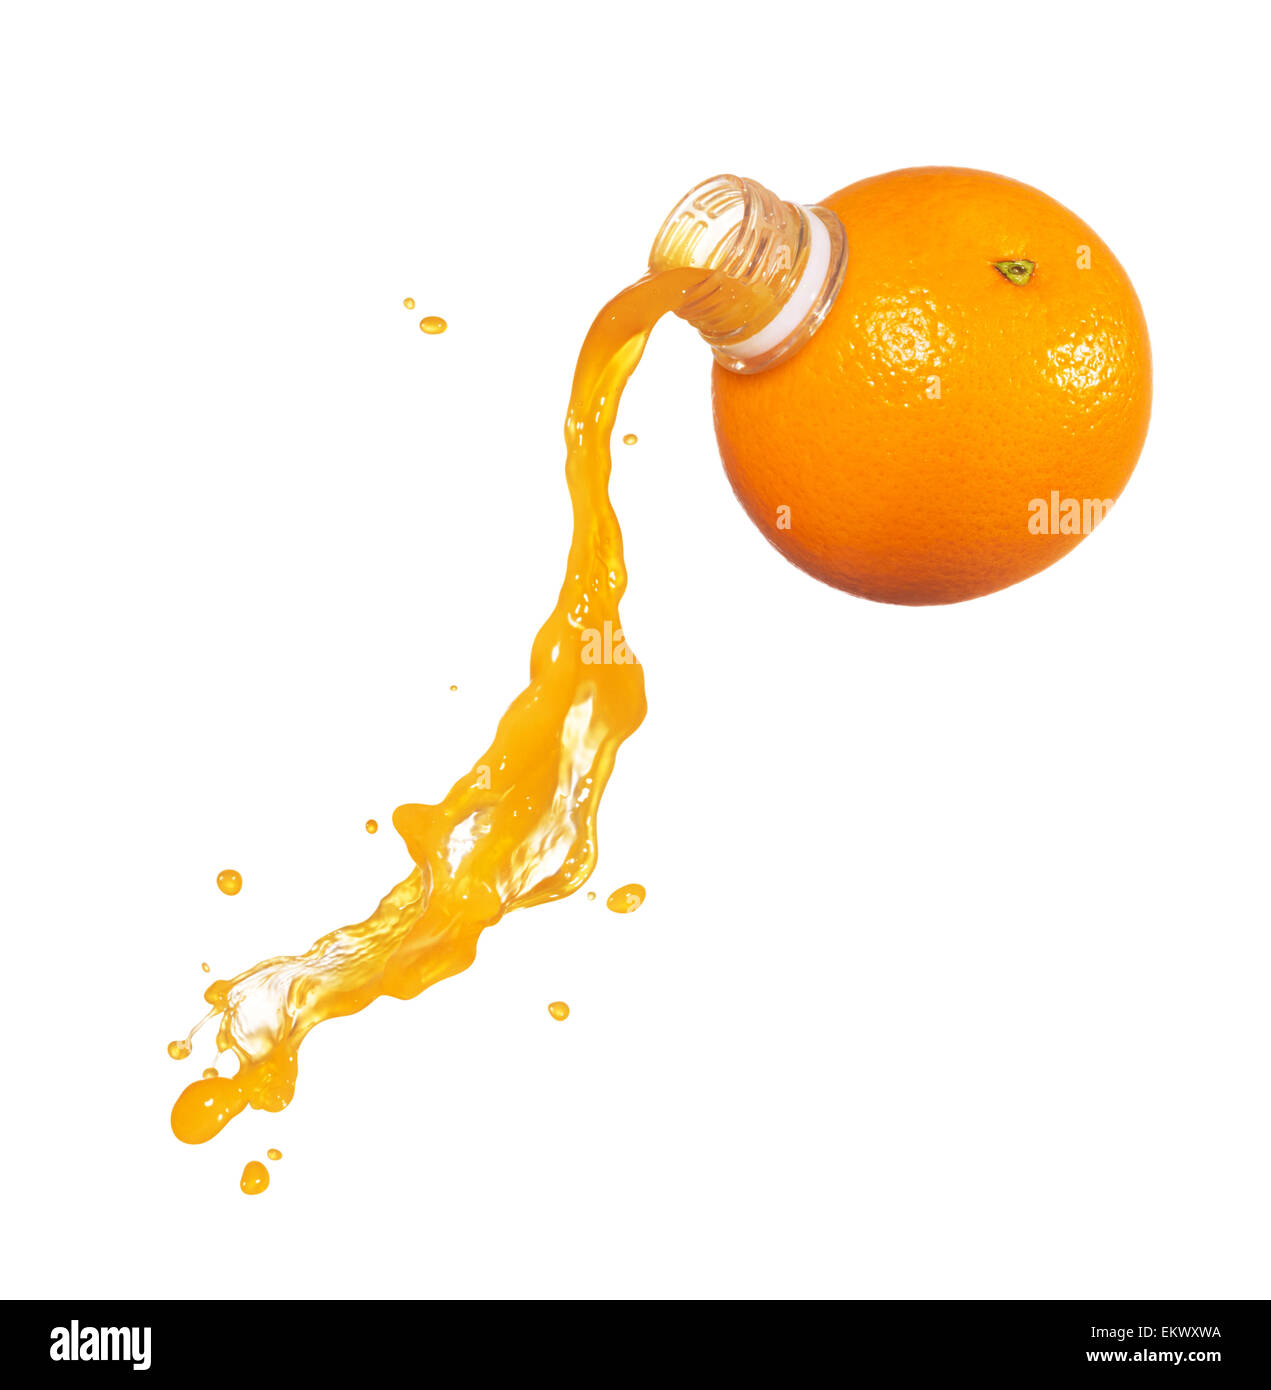 https://c8.alamy.com/comp/EKWXWA/pouring-juice-from-orange-with-bottle-neck-EKWXWA.jpg